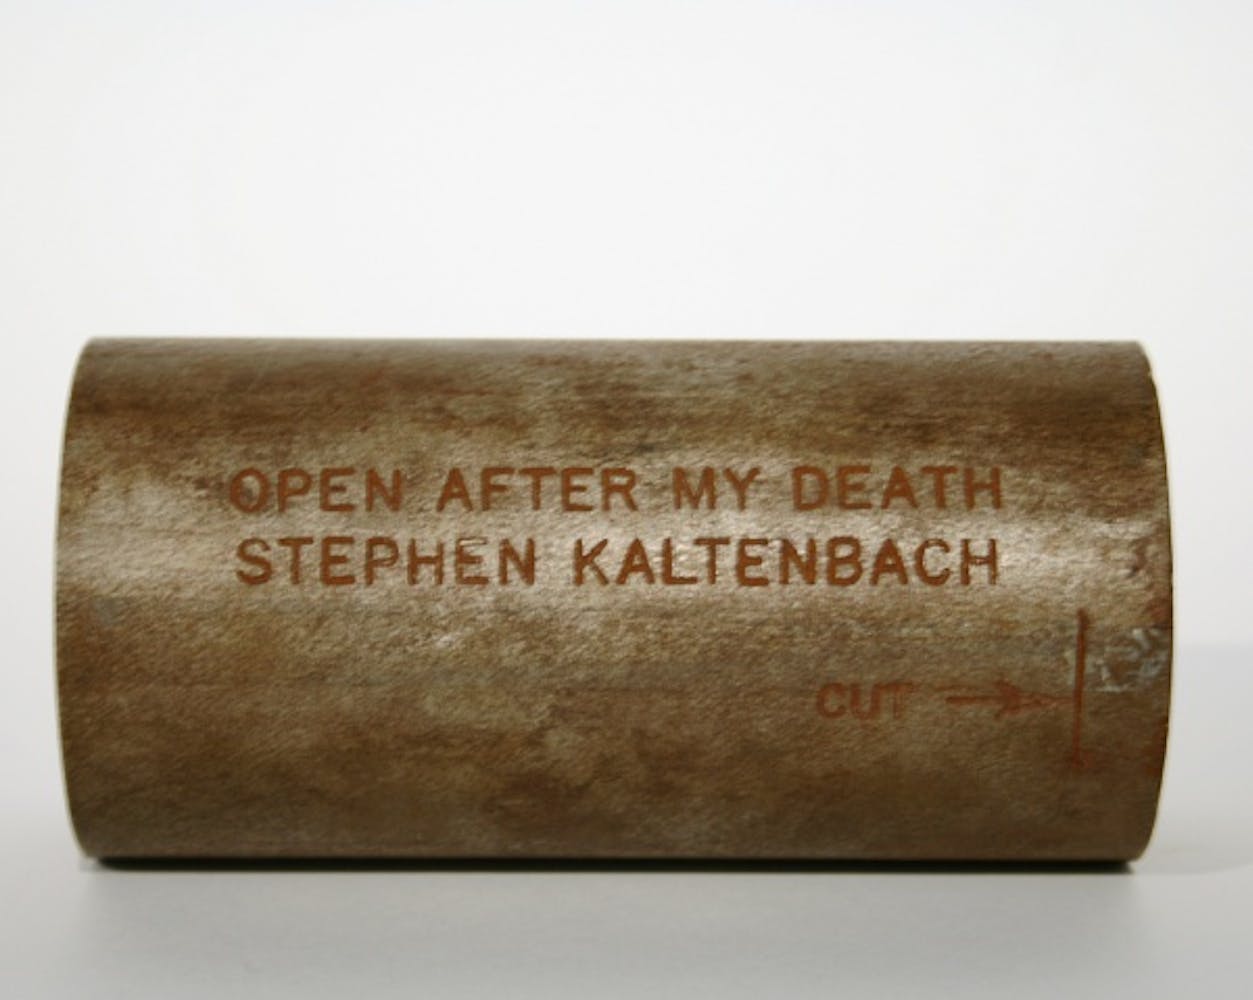 Stephen Kaltenbach, Time Capsule (OPEN AFTER MY DEATH STEPHEN KALTENBACH), 1970